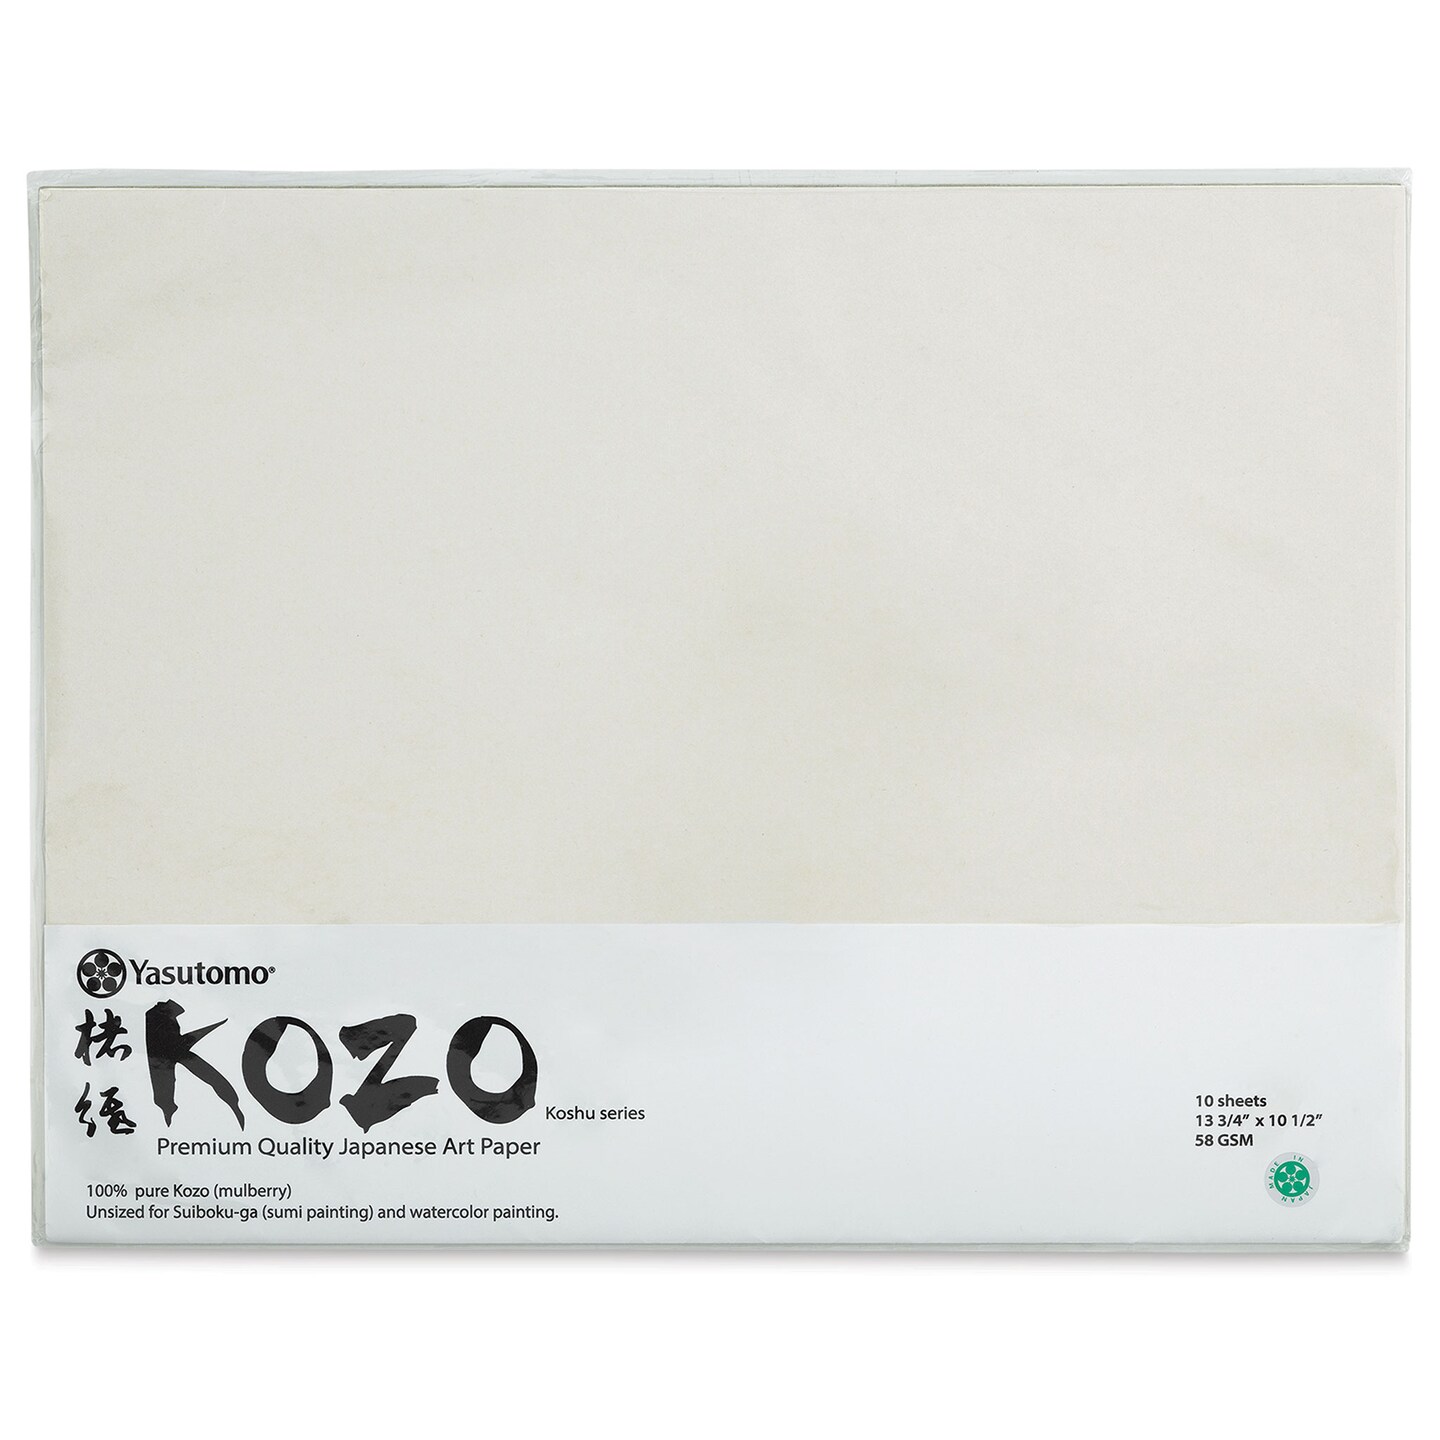 Yasutomo Kozo Paper - Pkg of 10 Sheets